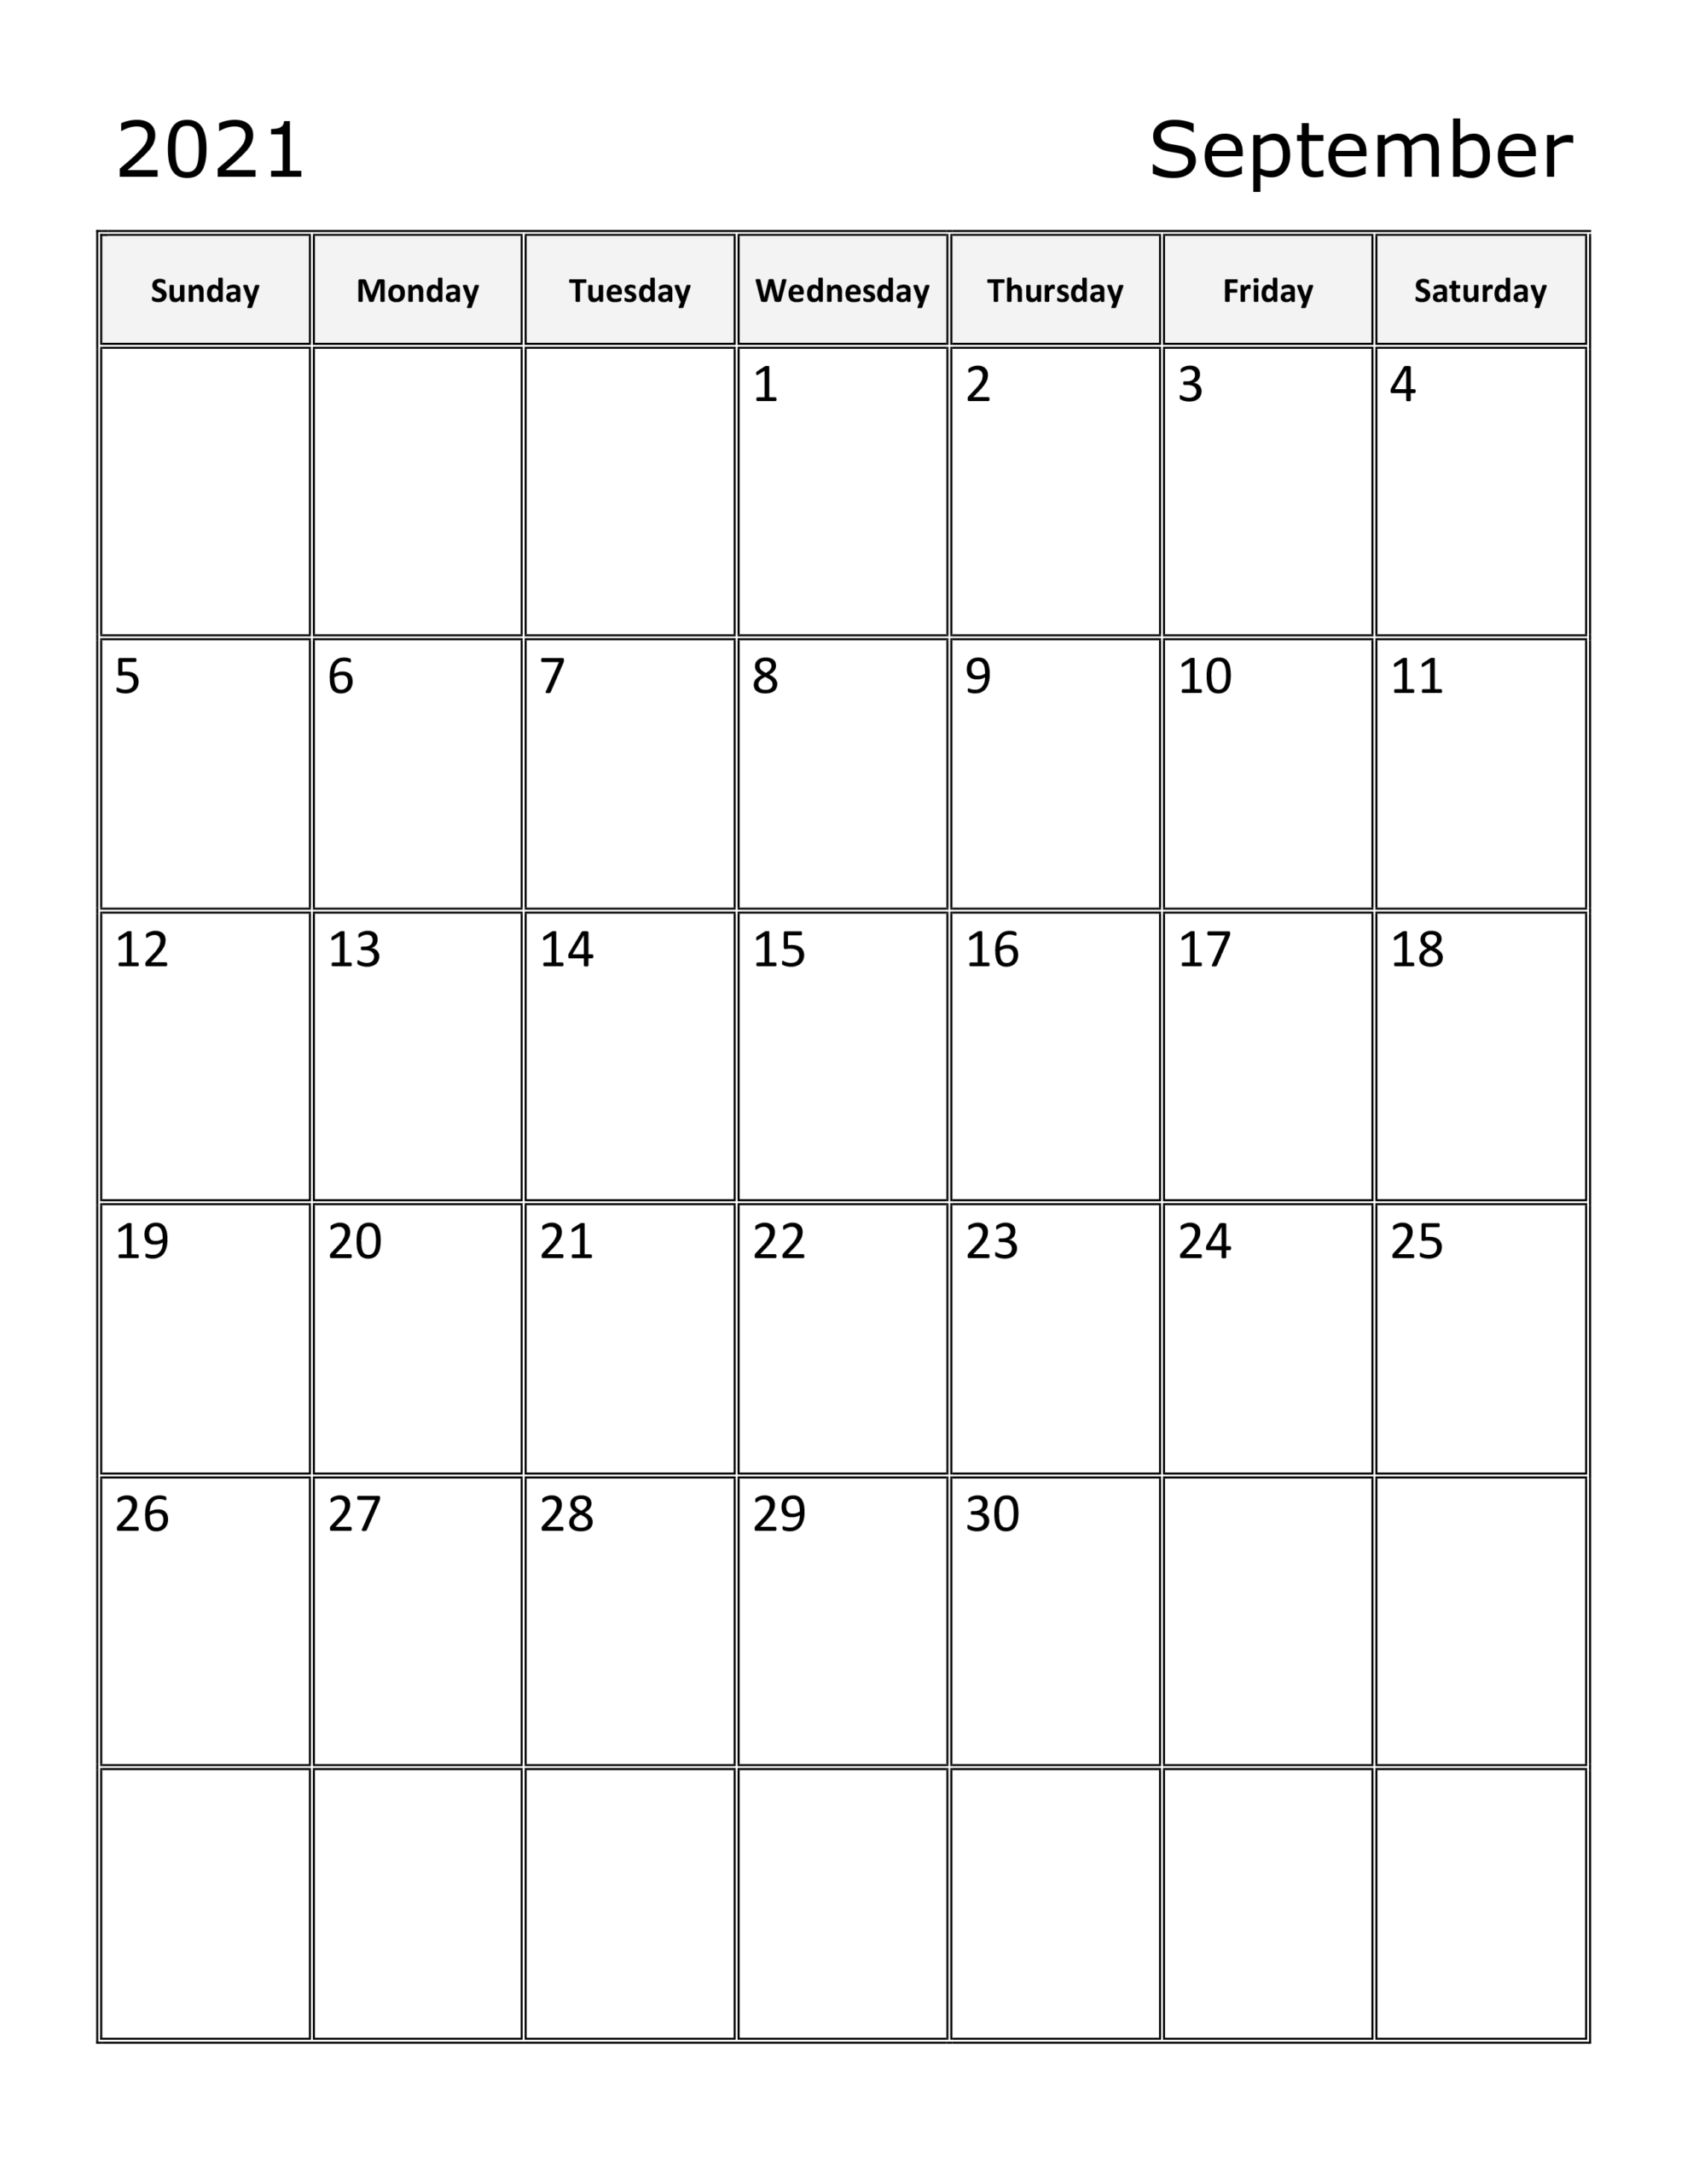 Get Calendar January 2022 Printable Wiki